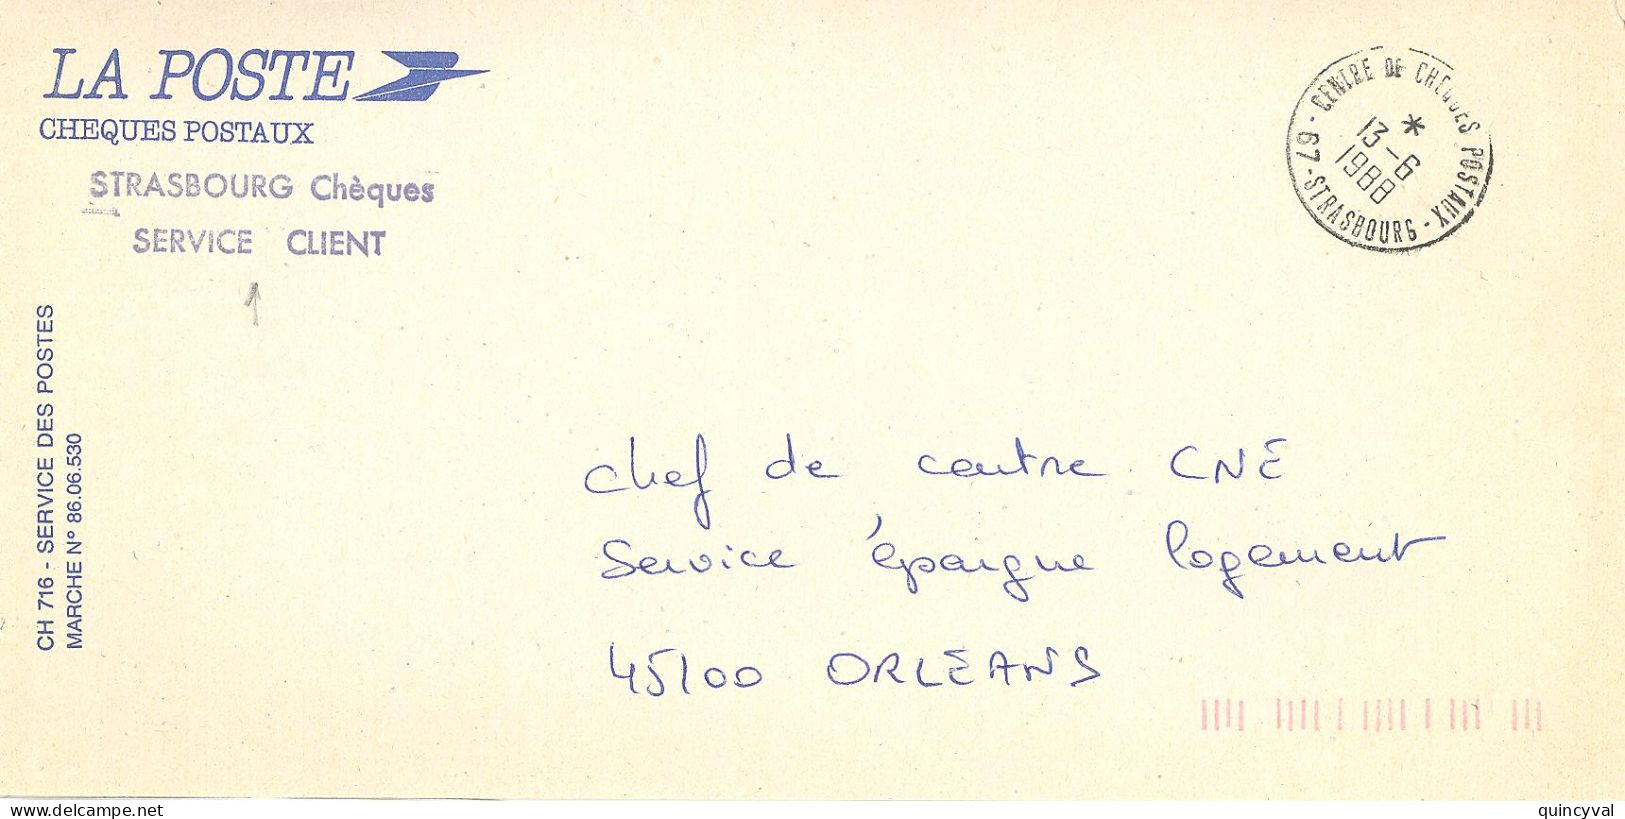 CENTRE DE CHEQUES POSATAUX 67 STRASBOURG  Ob 13 6 1988  Lettre Enveloppe CCP Cheques Postaux - Bolli Manuali